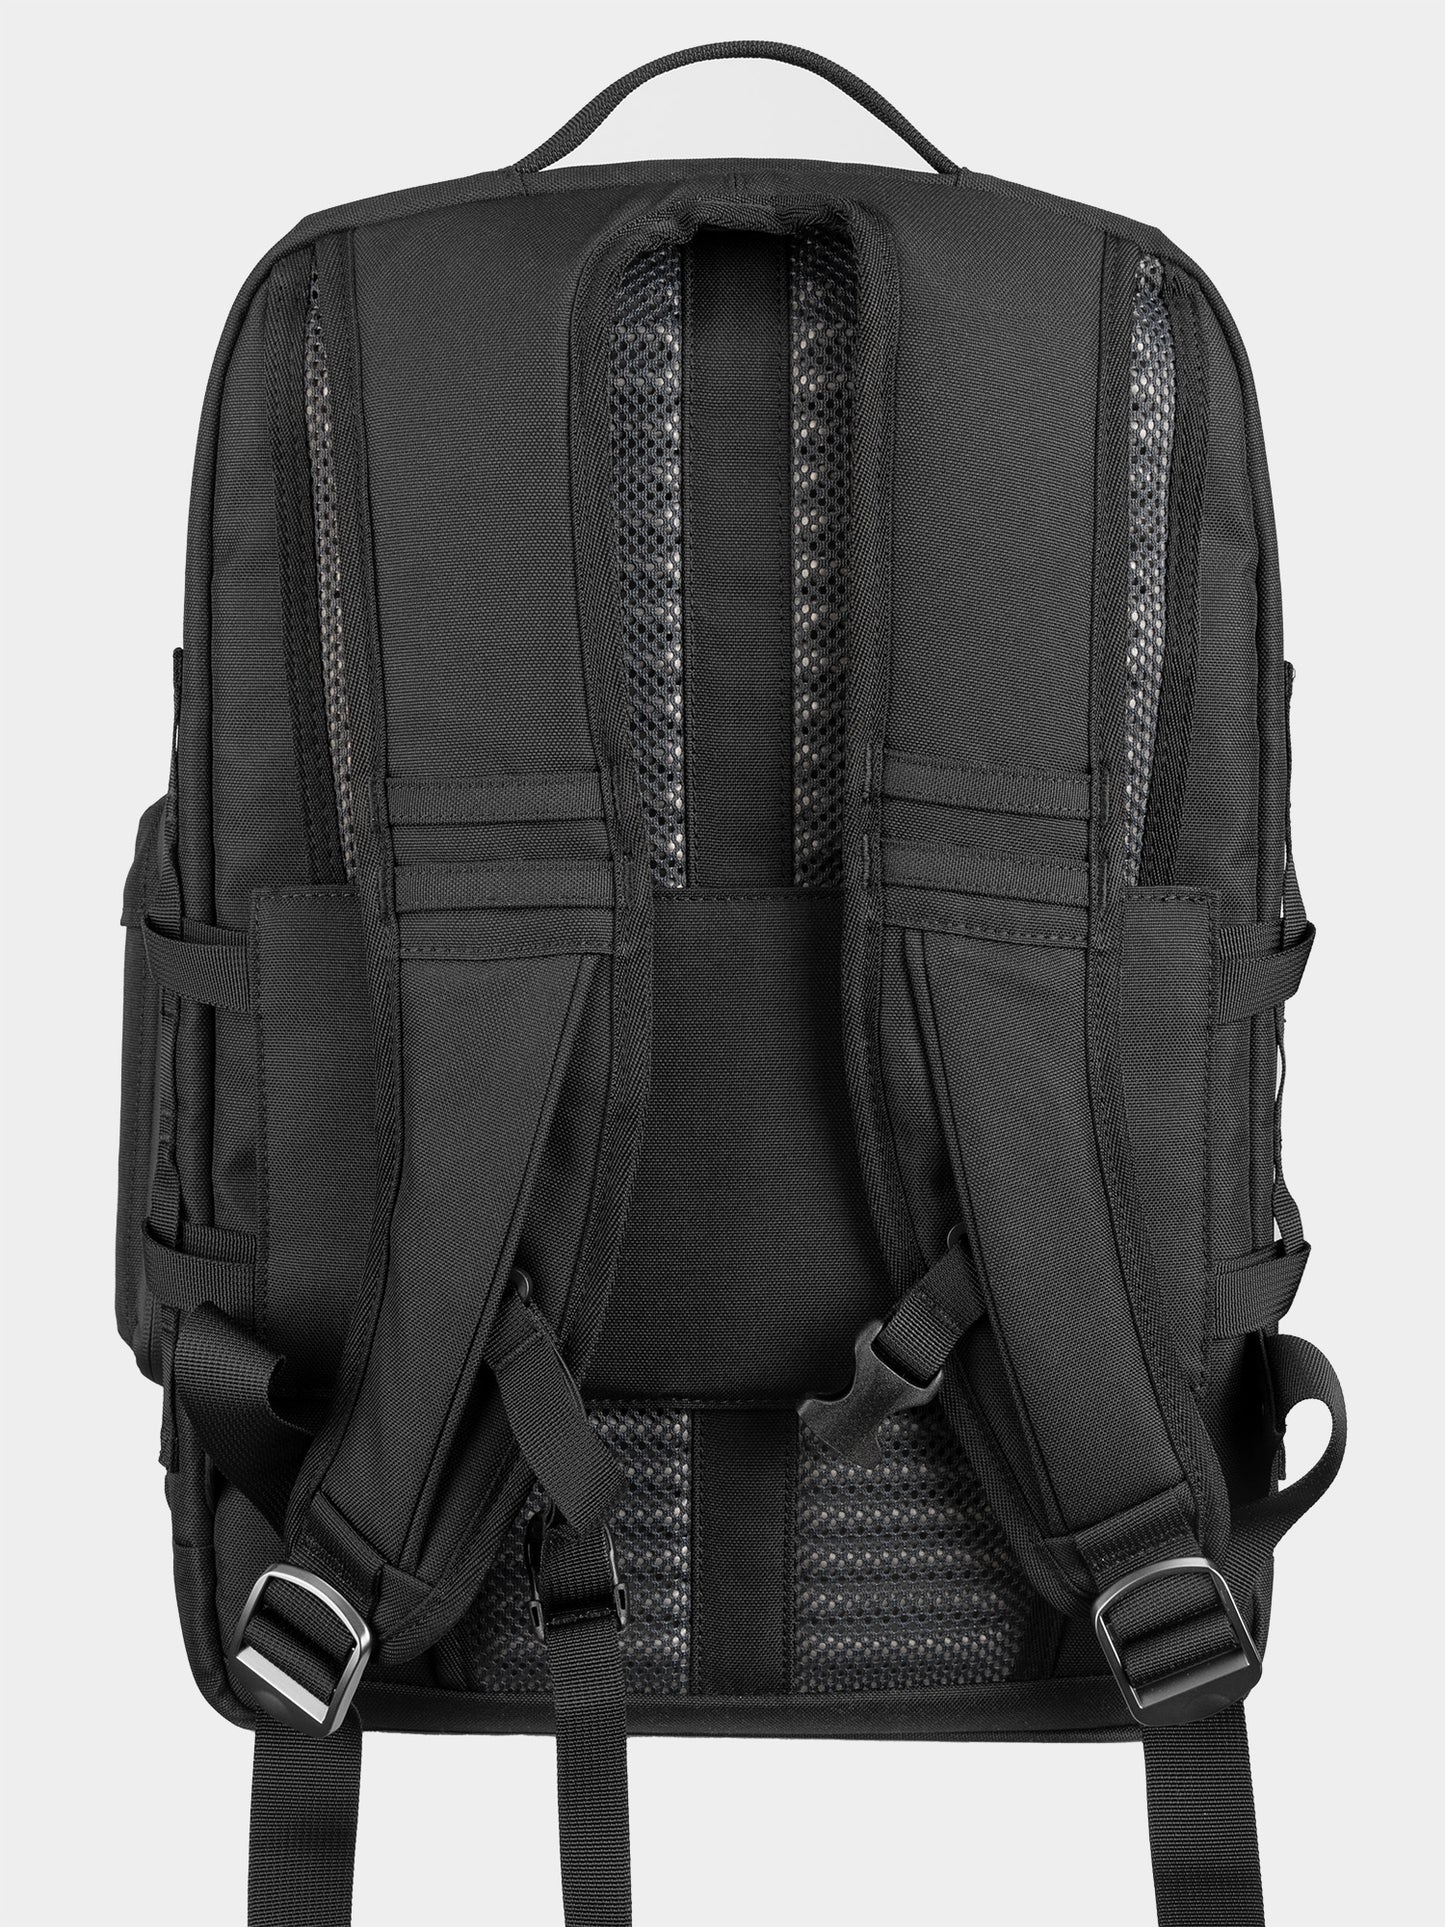 Grey Backpack